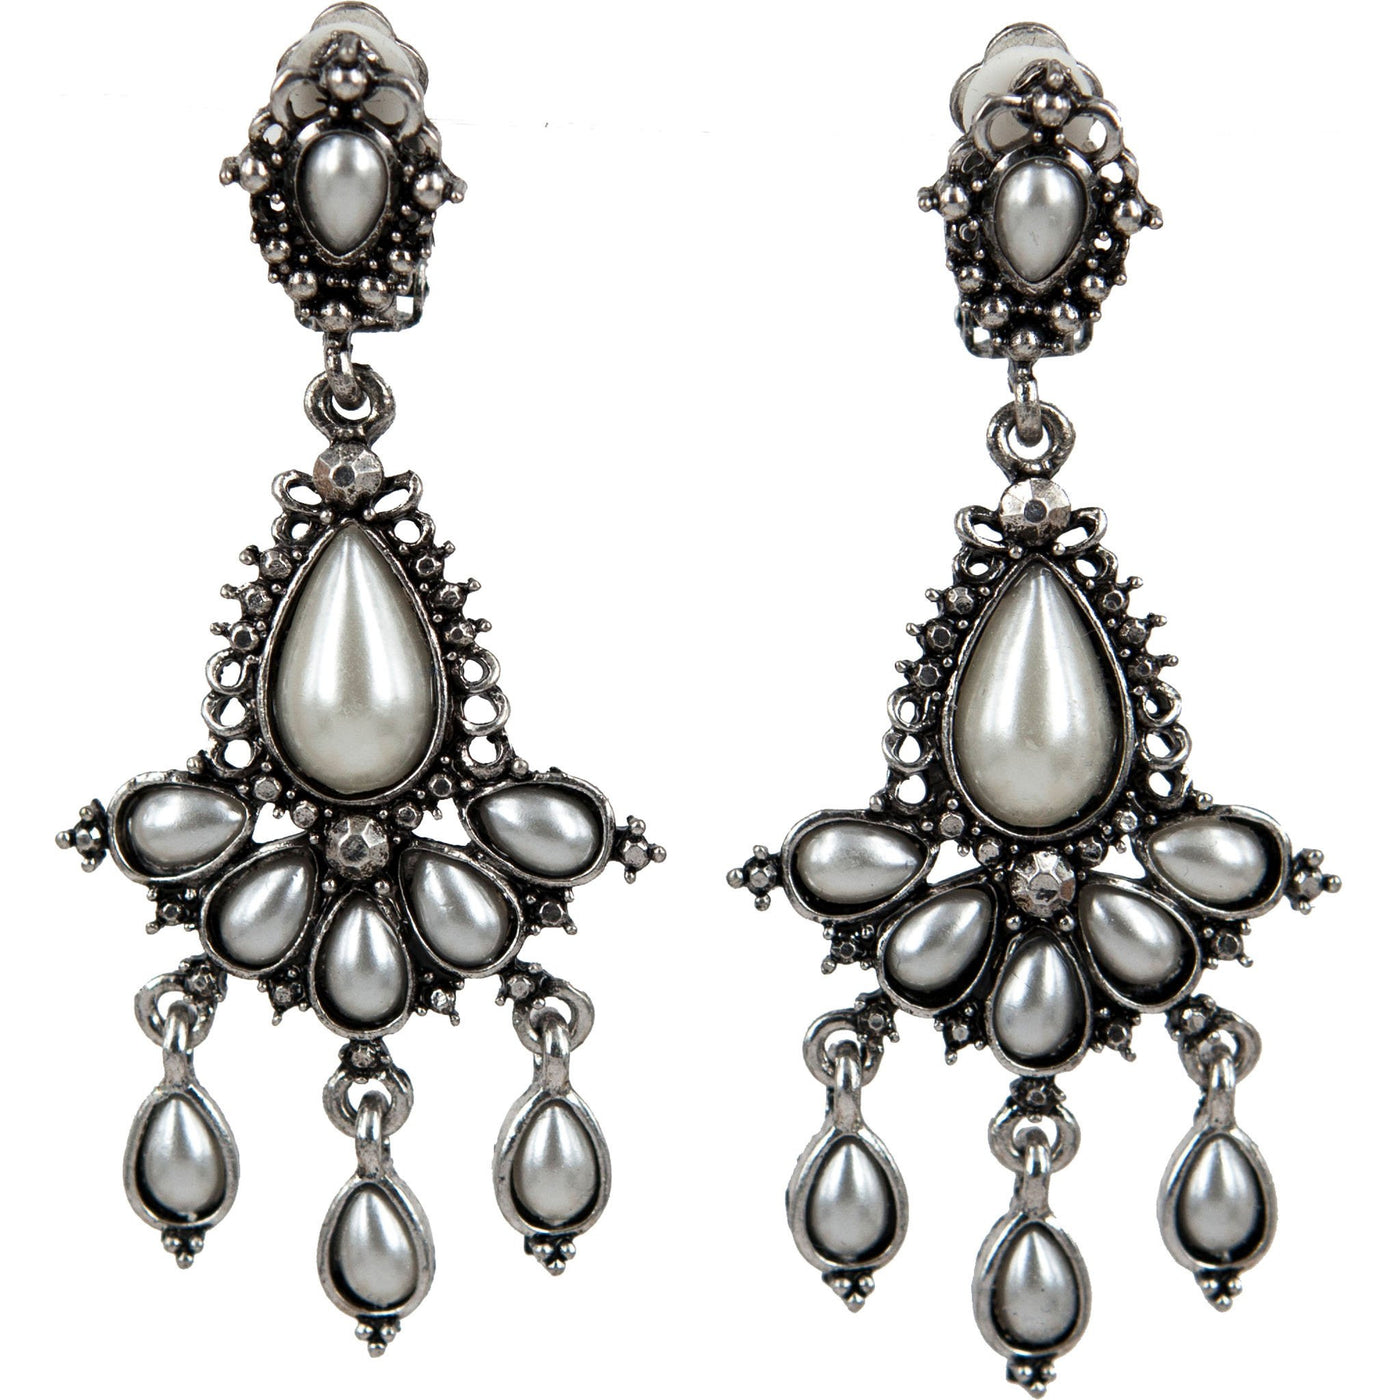 Pearl clip earrings